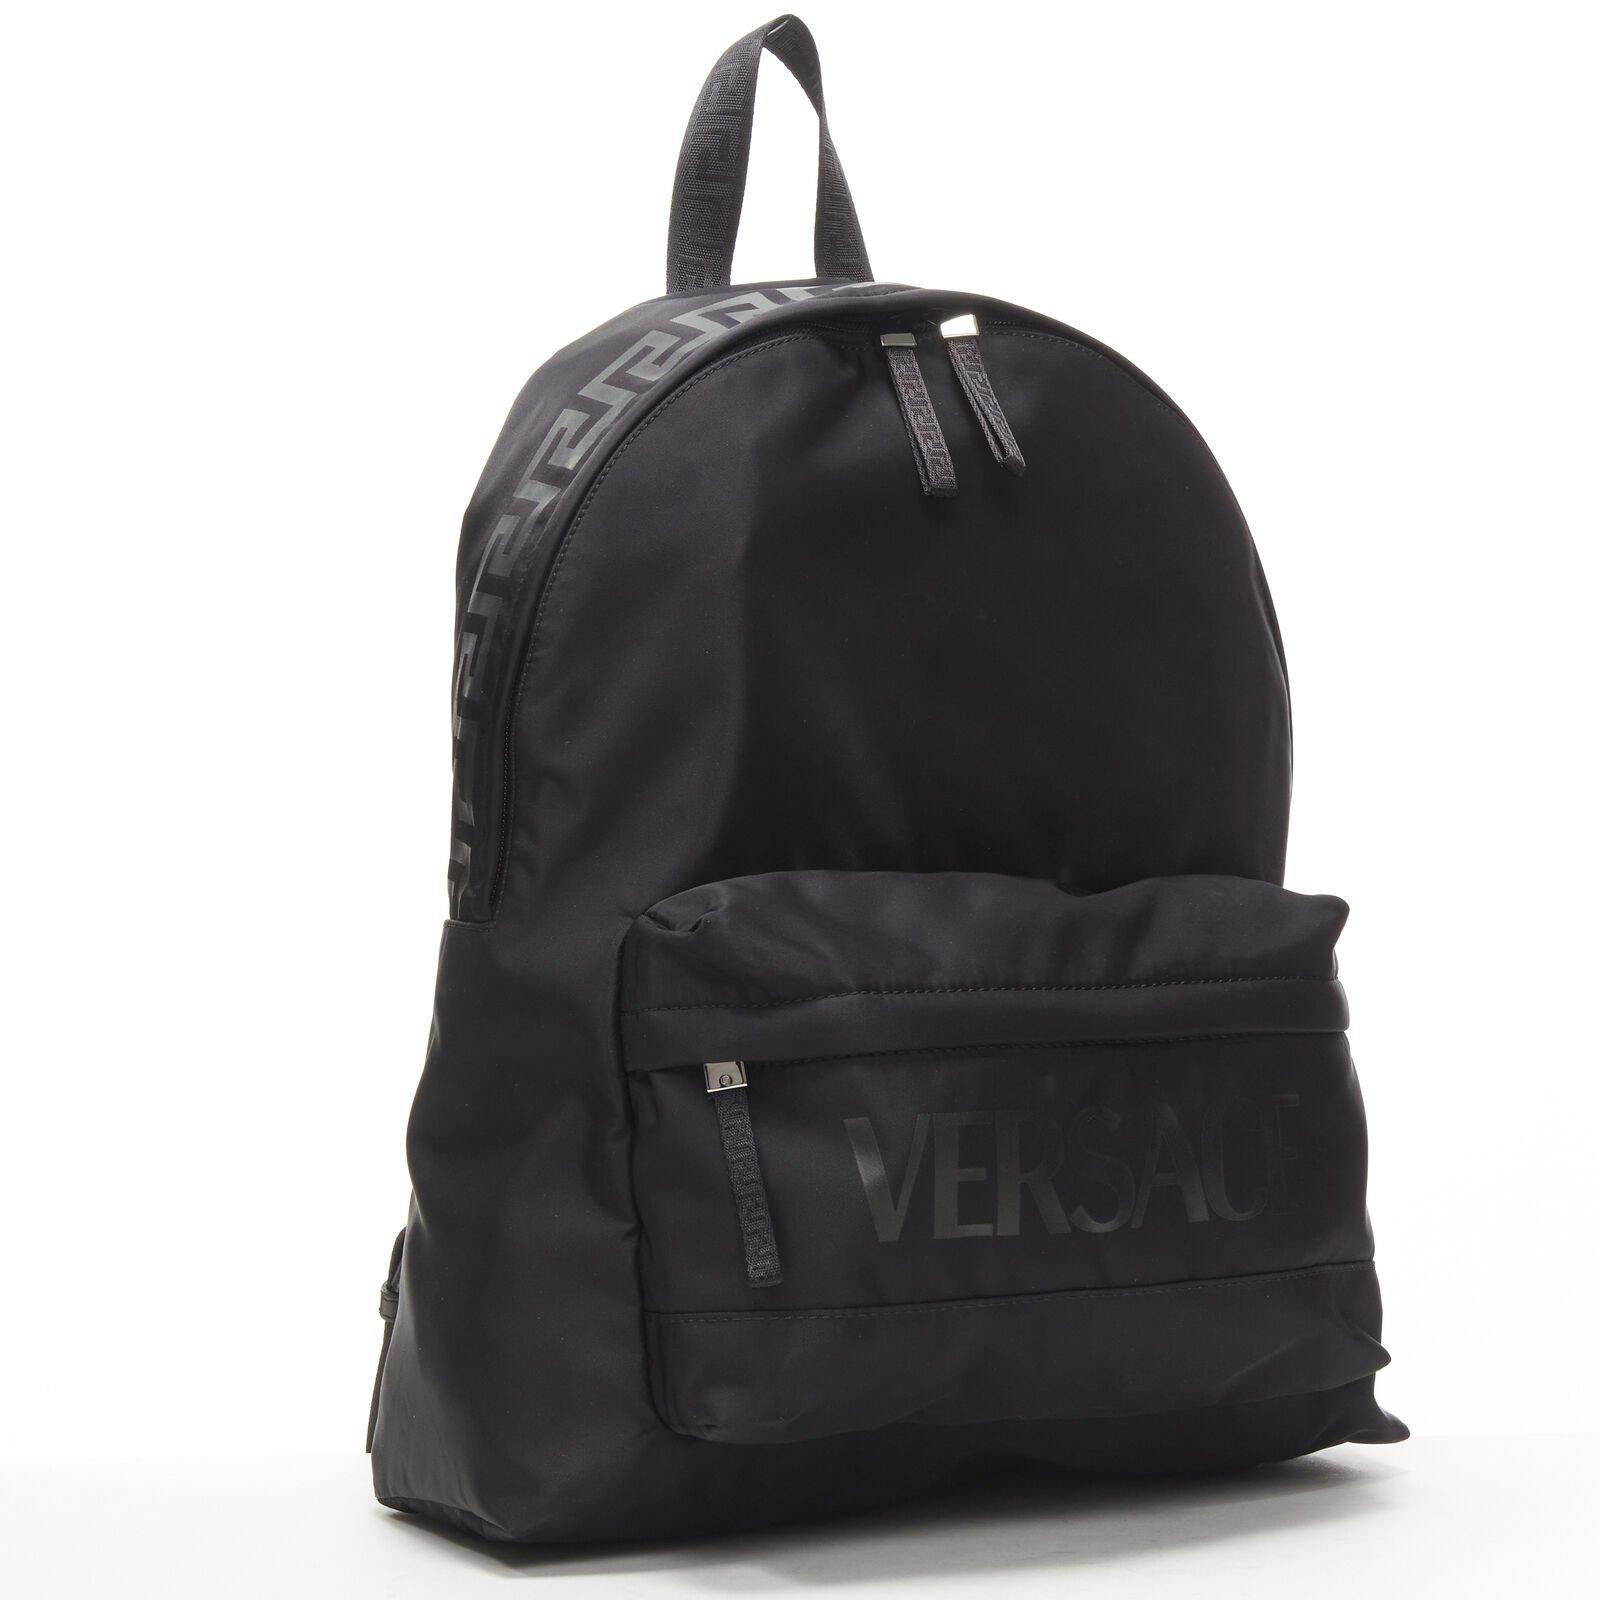 VERSACE La Greca 90's logo black nylon backpack bag
Reference: TGAS/C00349
Brand: Versace
Designer: Donatella Versace
Model: 1002886 1A02180 2B77E
Collection: La Greca
Material: Nylon
Color: Black
Pattern: Solid
Closure: Zip
Lining: Fabric
Extra